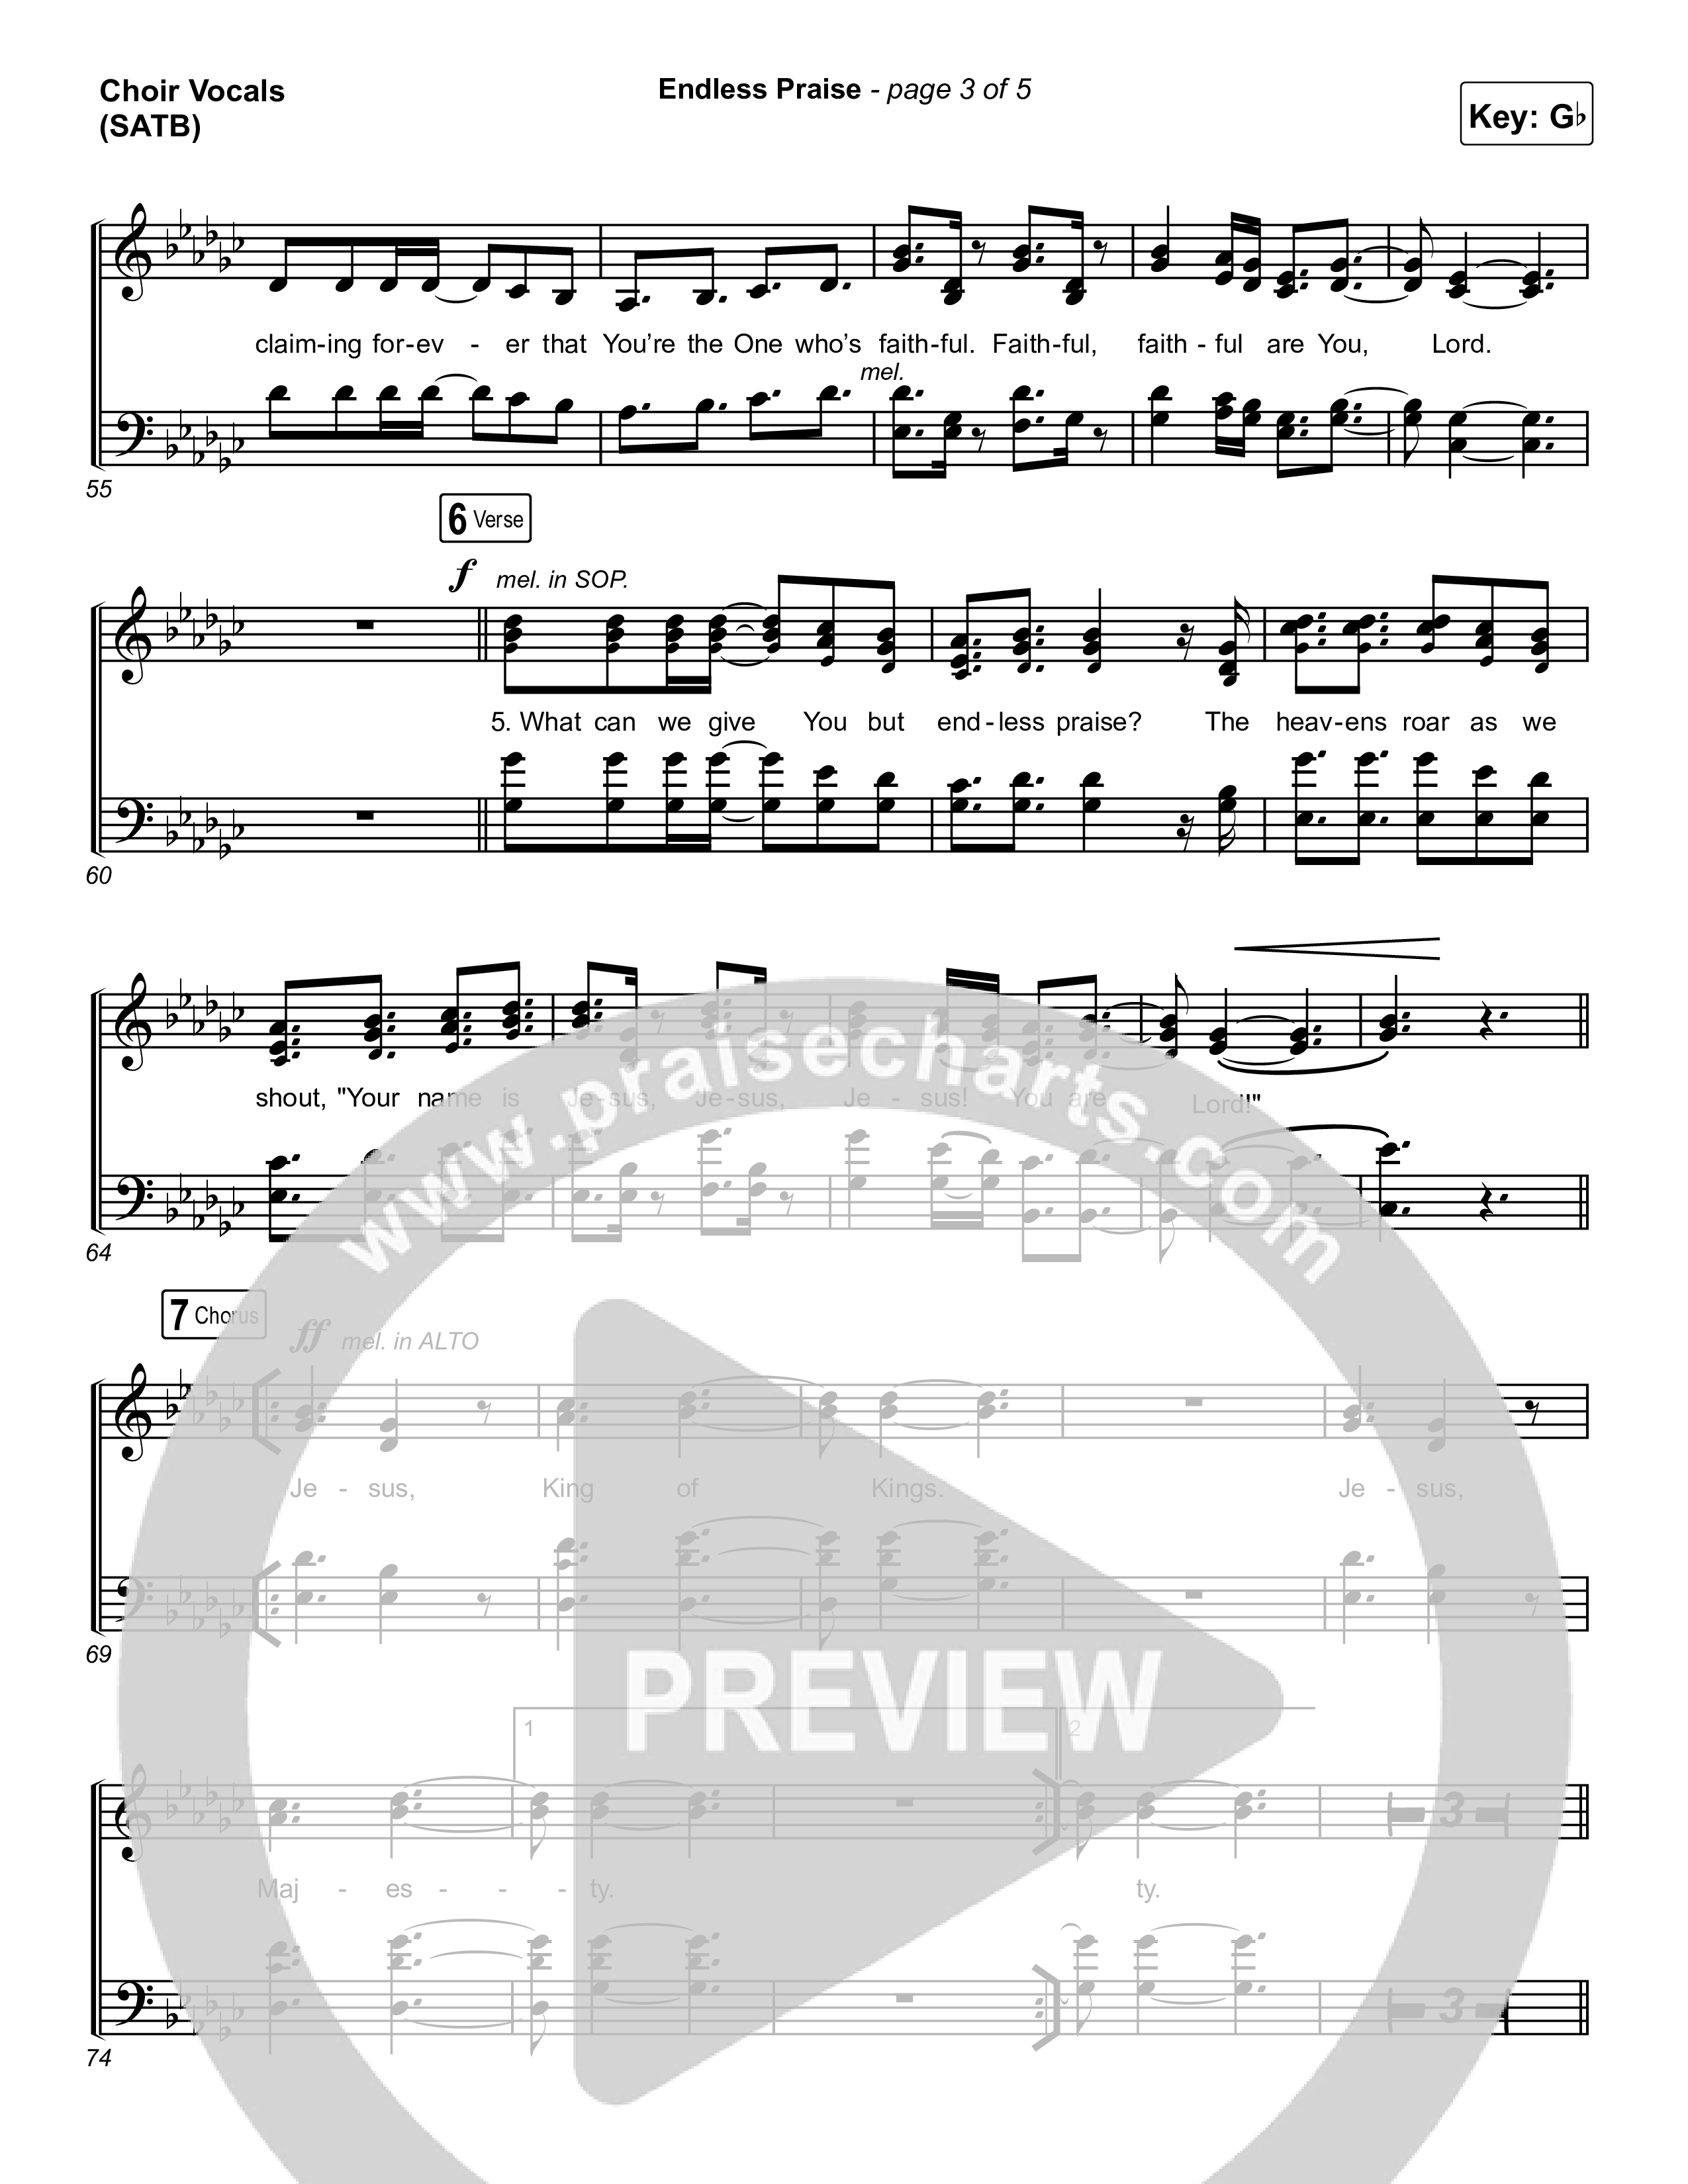 Endless Praise (Choral Anthem SATB) Choir Sheet (SATB) (Arr. Luke Gambill / Charity Gayle)